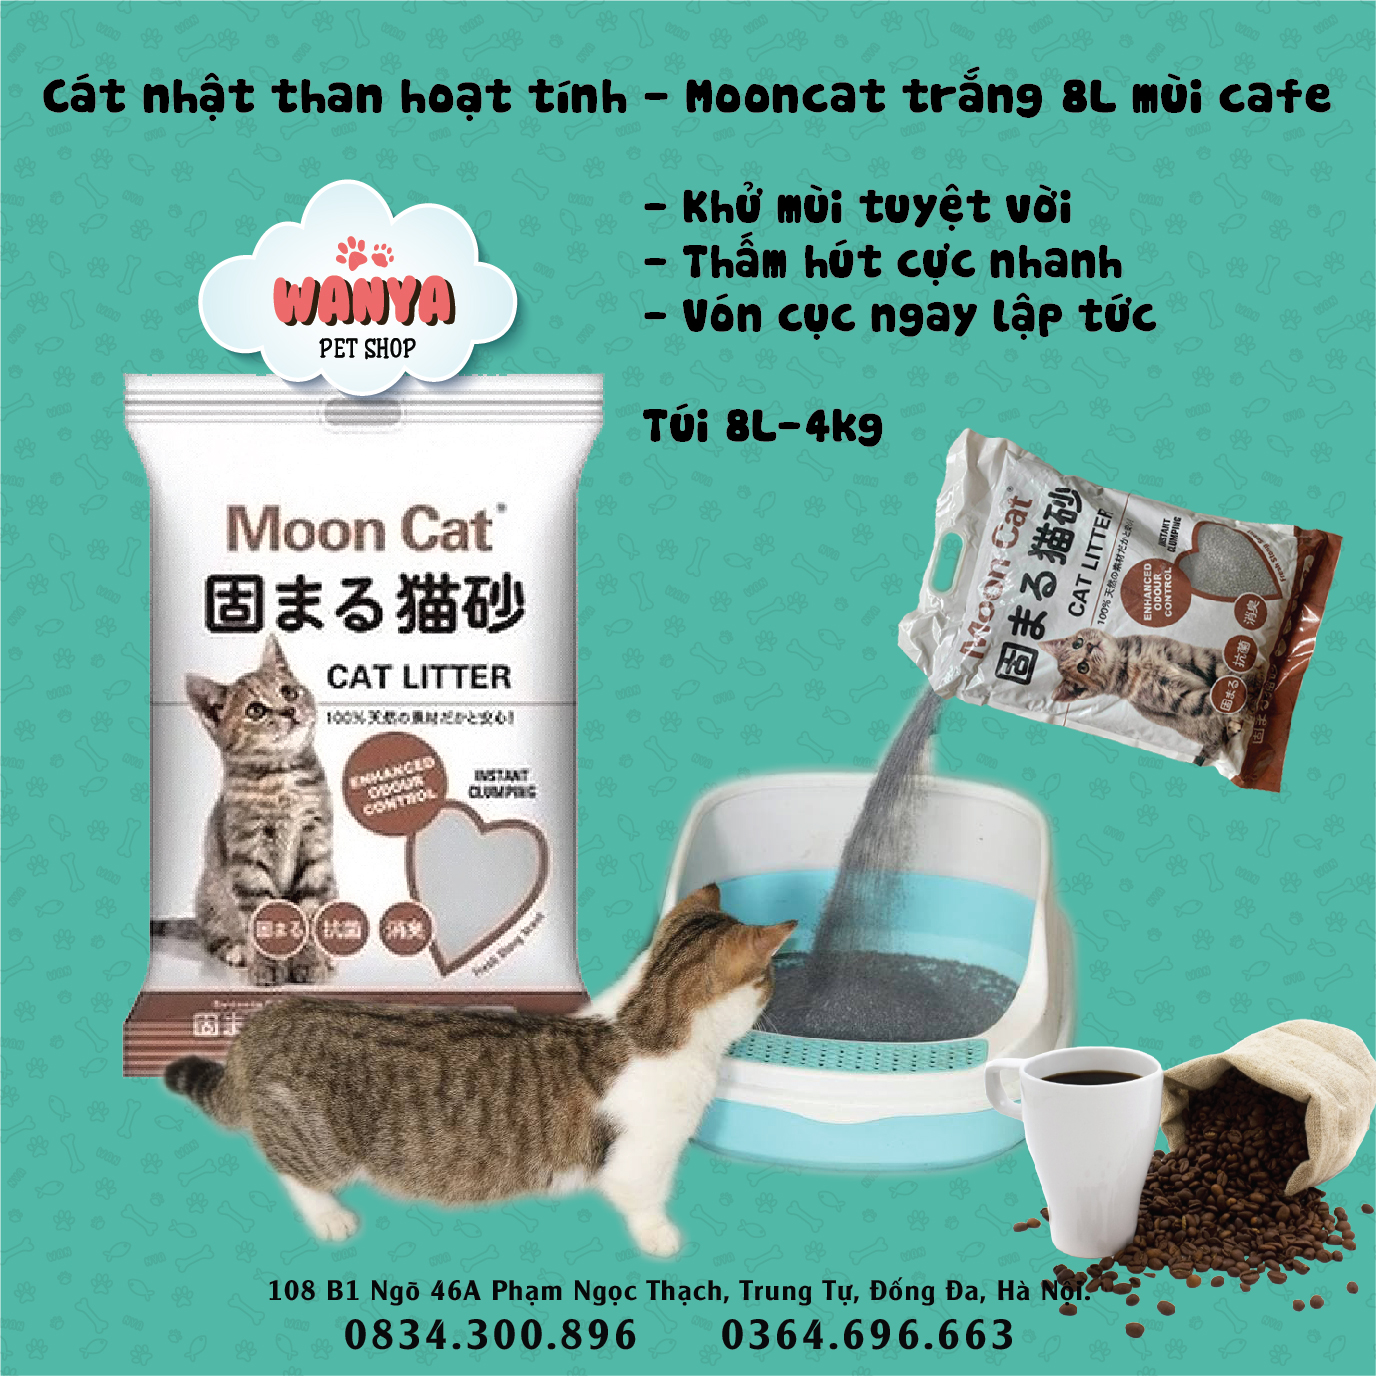 Cát nhật than hoạt tính - Mooncat trắng 8L mùi cafe Wanya Pet Shop